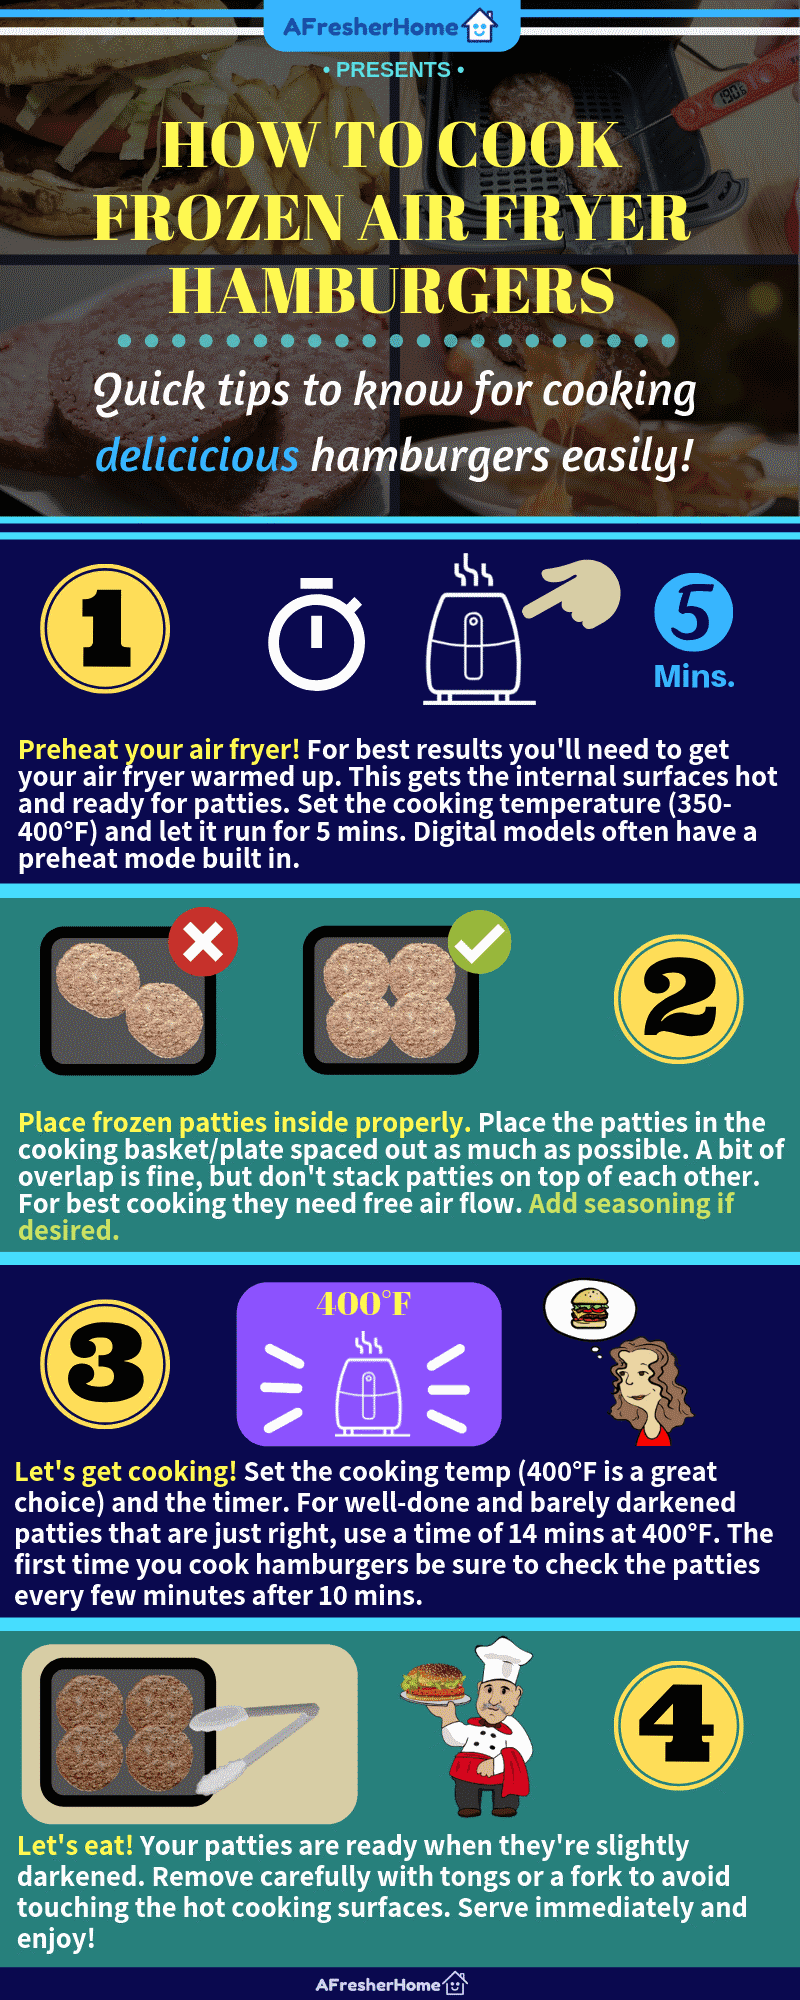 Air fryer frozen hamburger cooking guide infographic